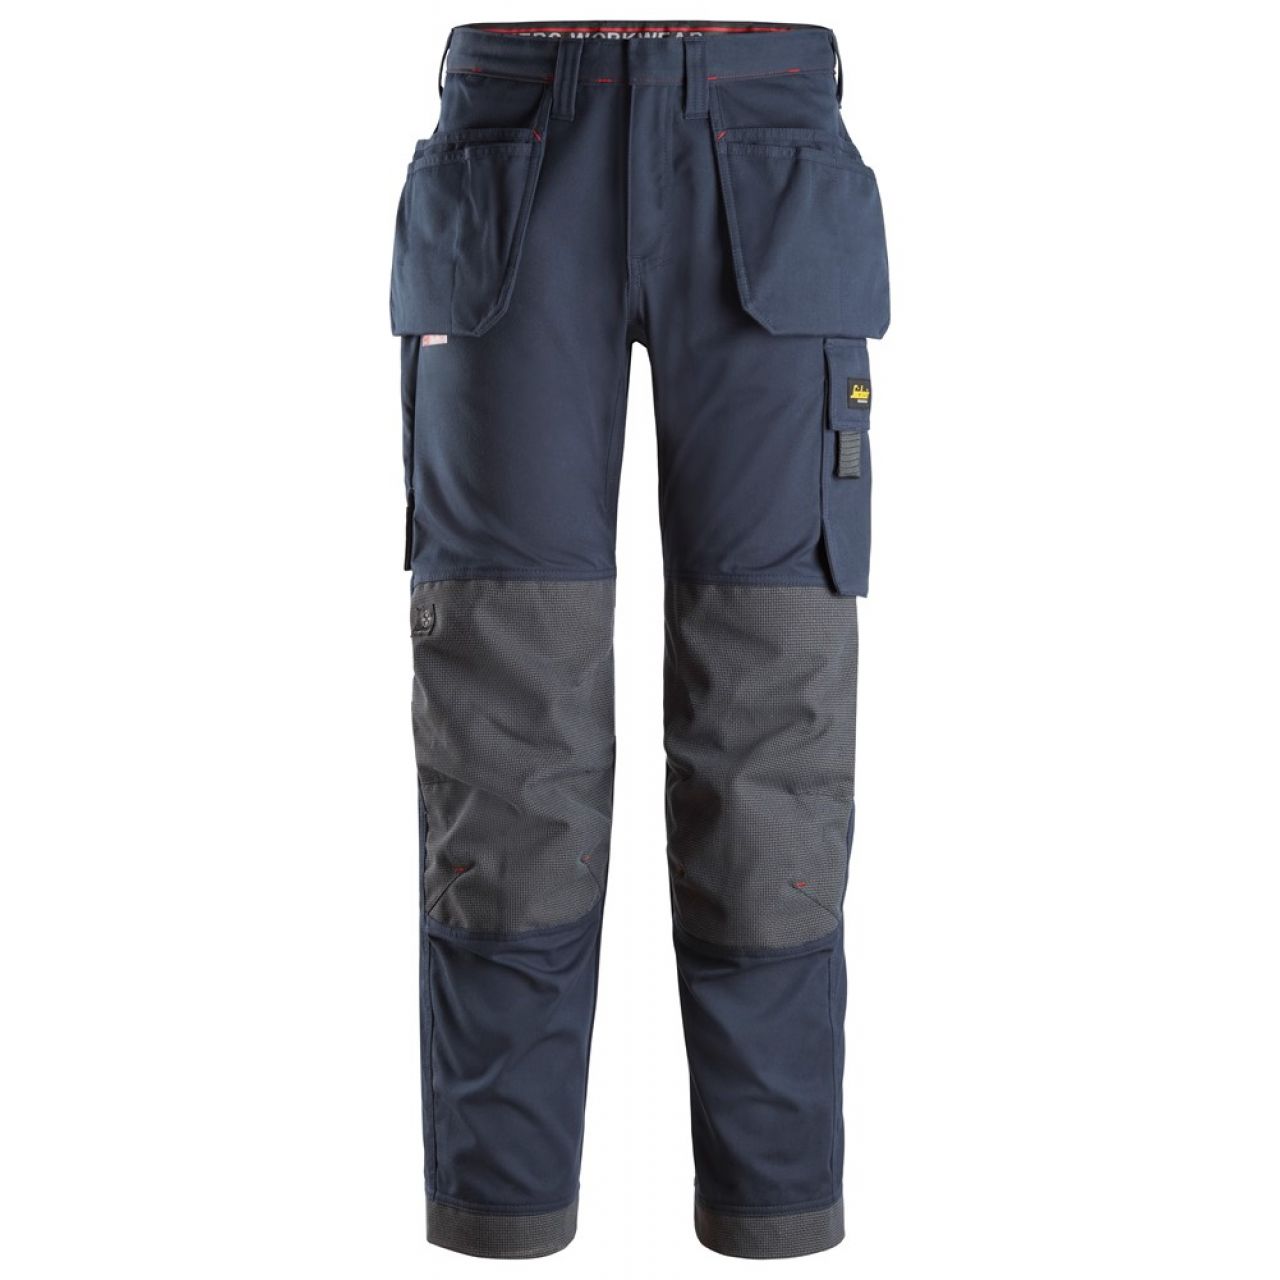 6286 Pantalones largos de trabajo con bolsillos flotantes ProtecWork azul marino talla 128